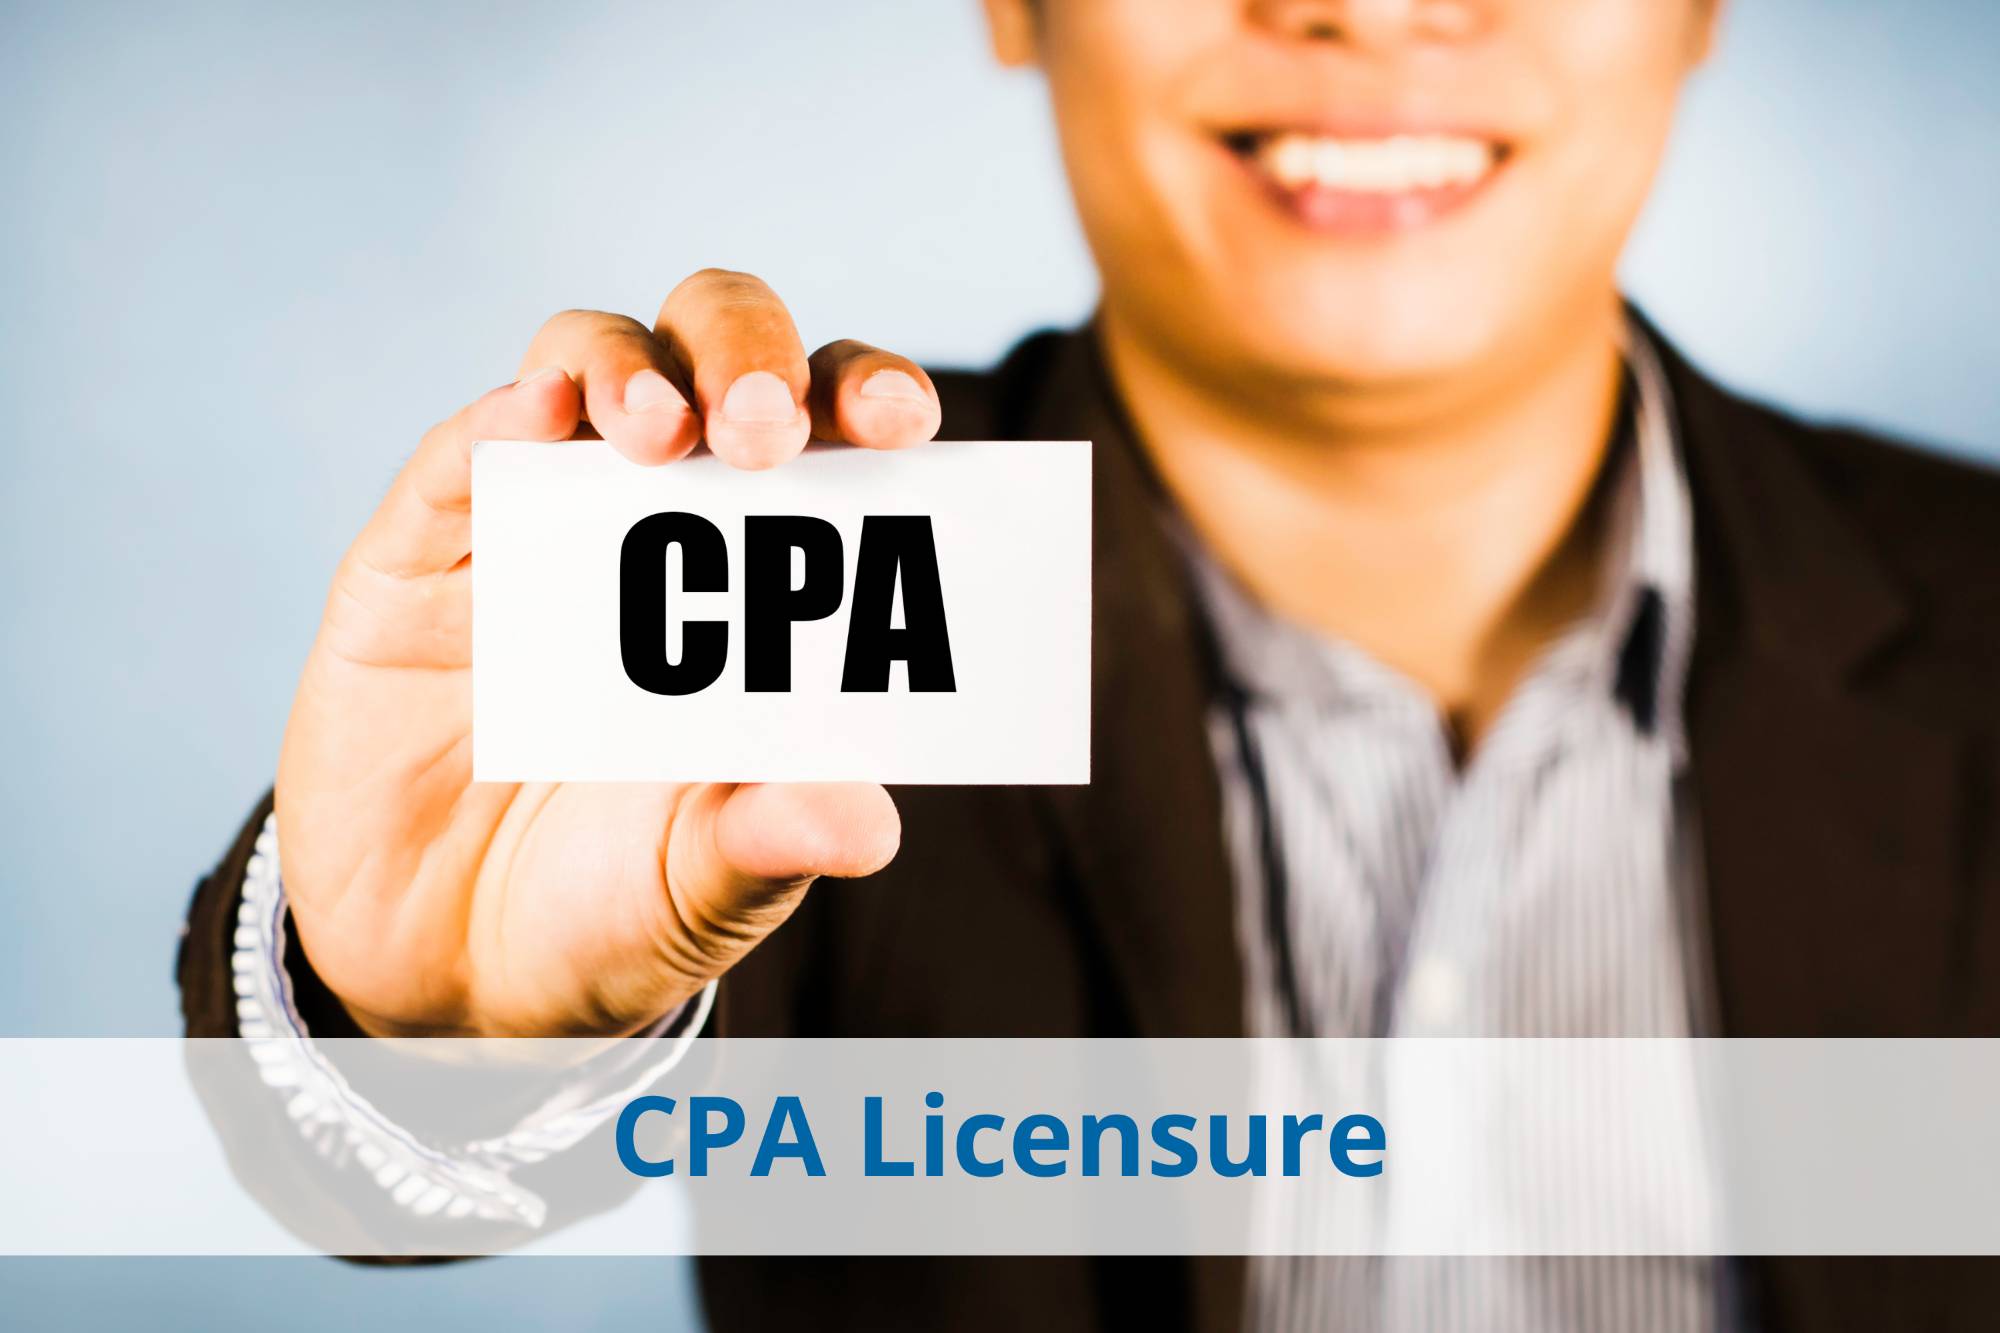 CPA licensure